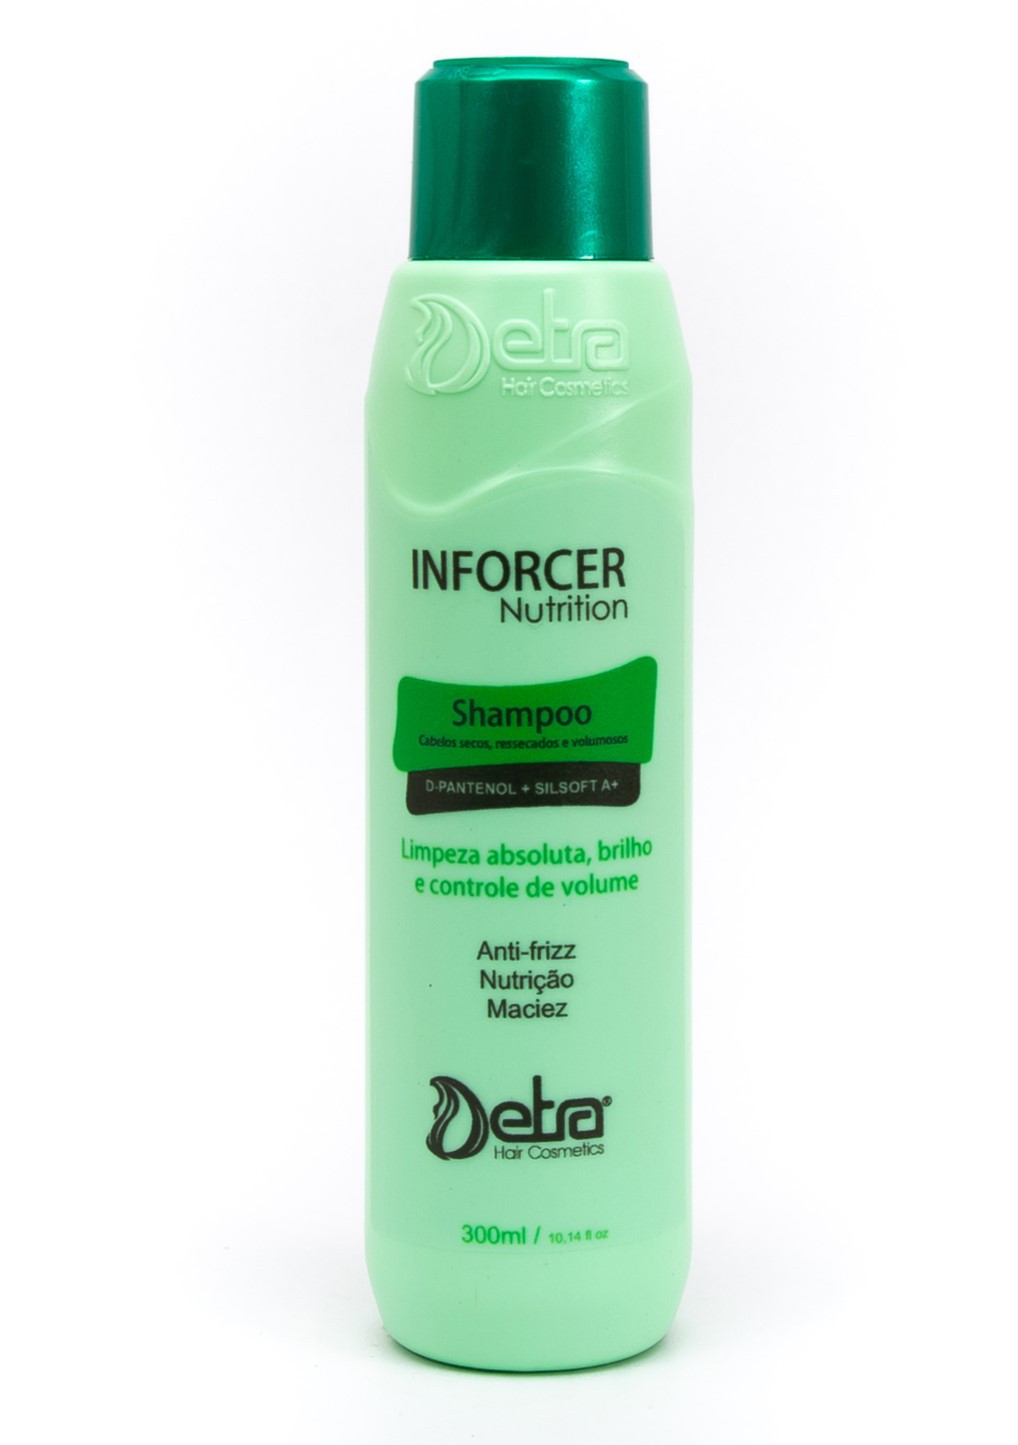 Detra Shampoo Inforcer Nutrition 300ml - Biduca Cosméticos